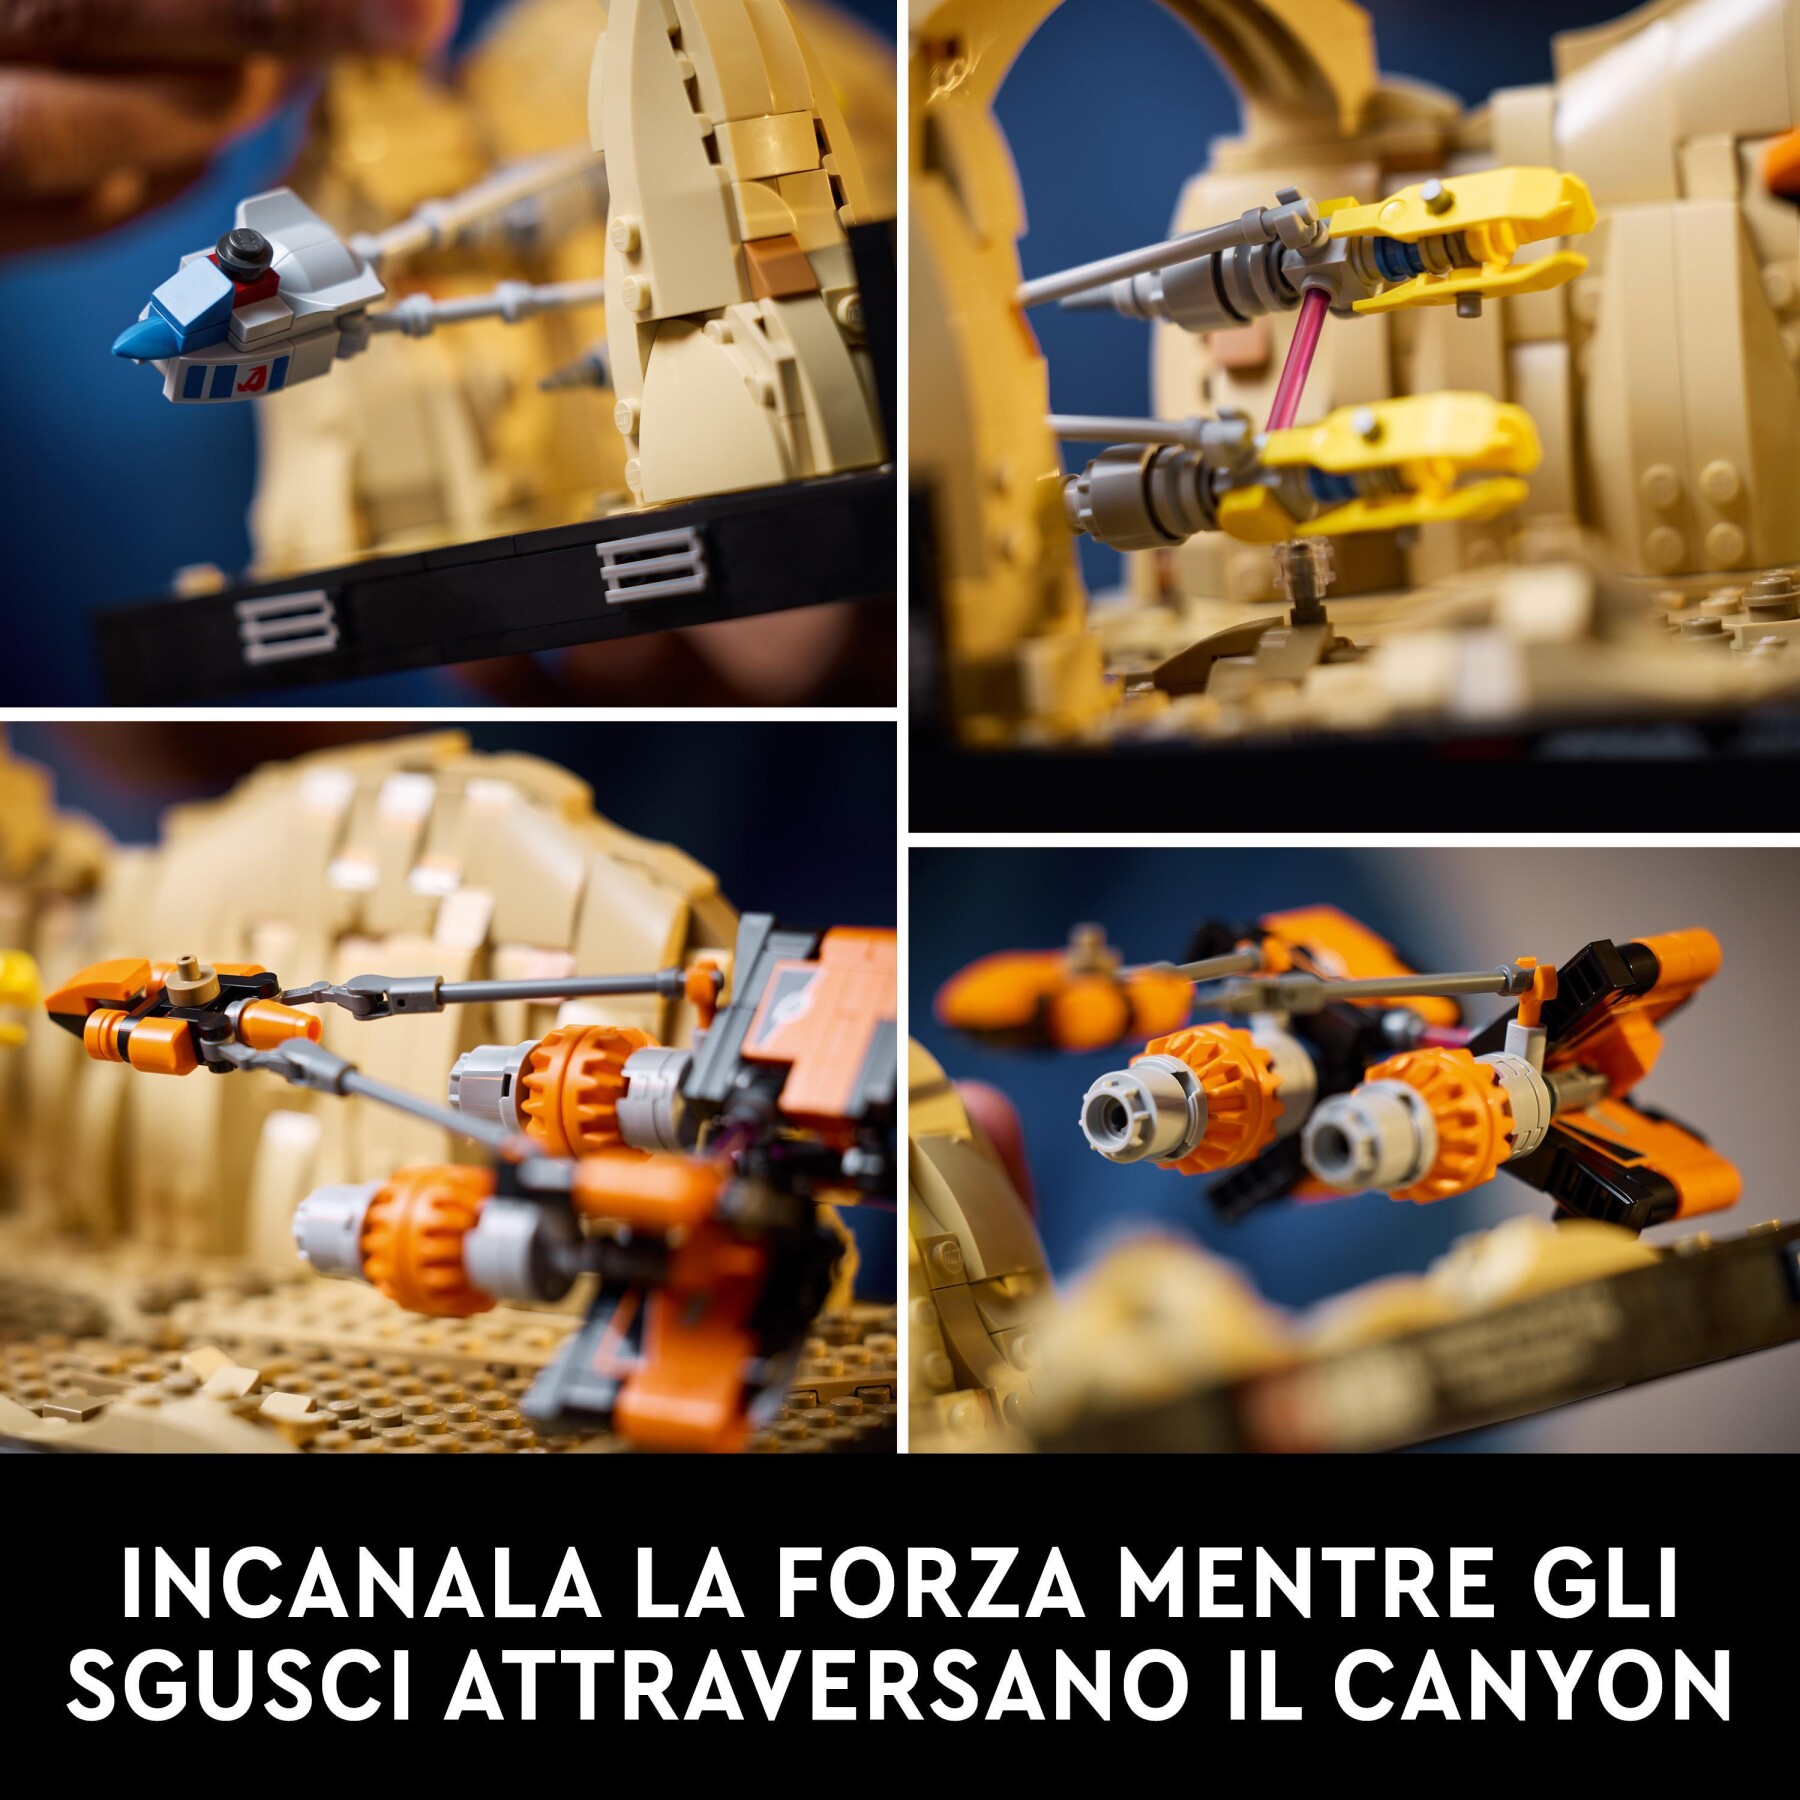 Lego star wars 75380 diorama gara dei sgusci su mos espa di anakin skywalker, regalo da collezione per adulti, fan, lui o lei - LEGO® Star Wars™